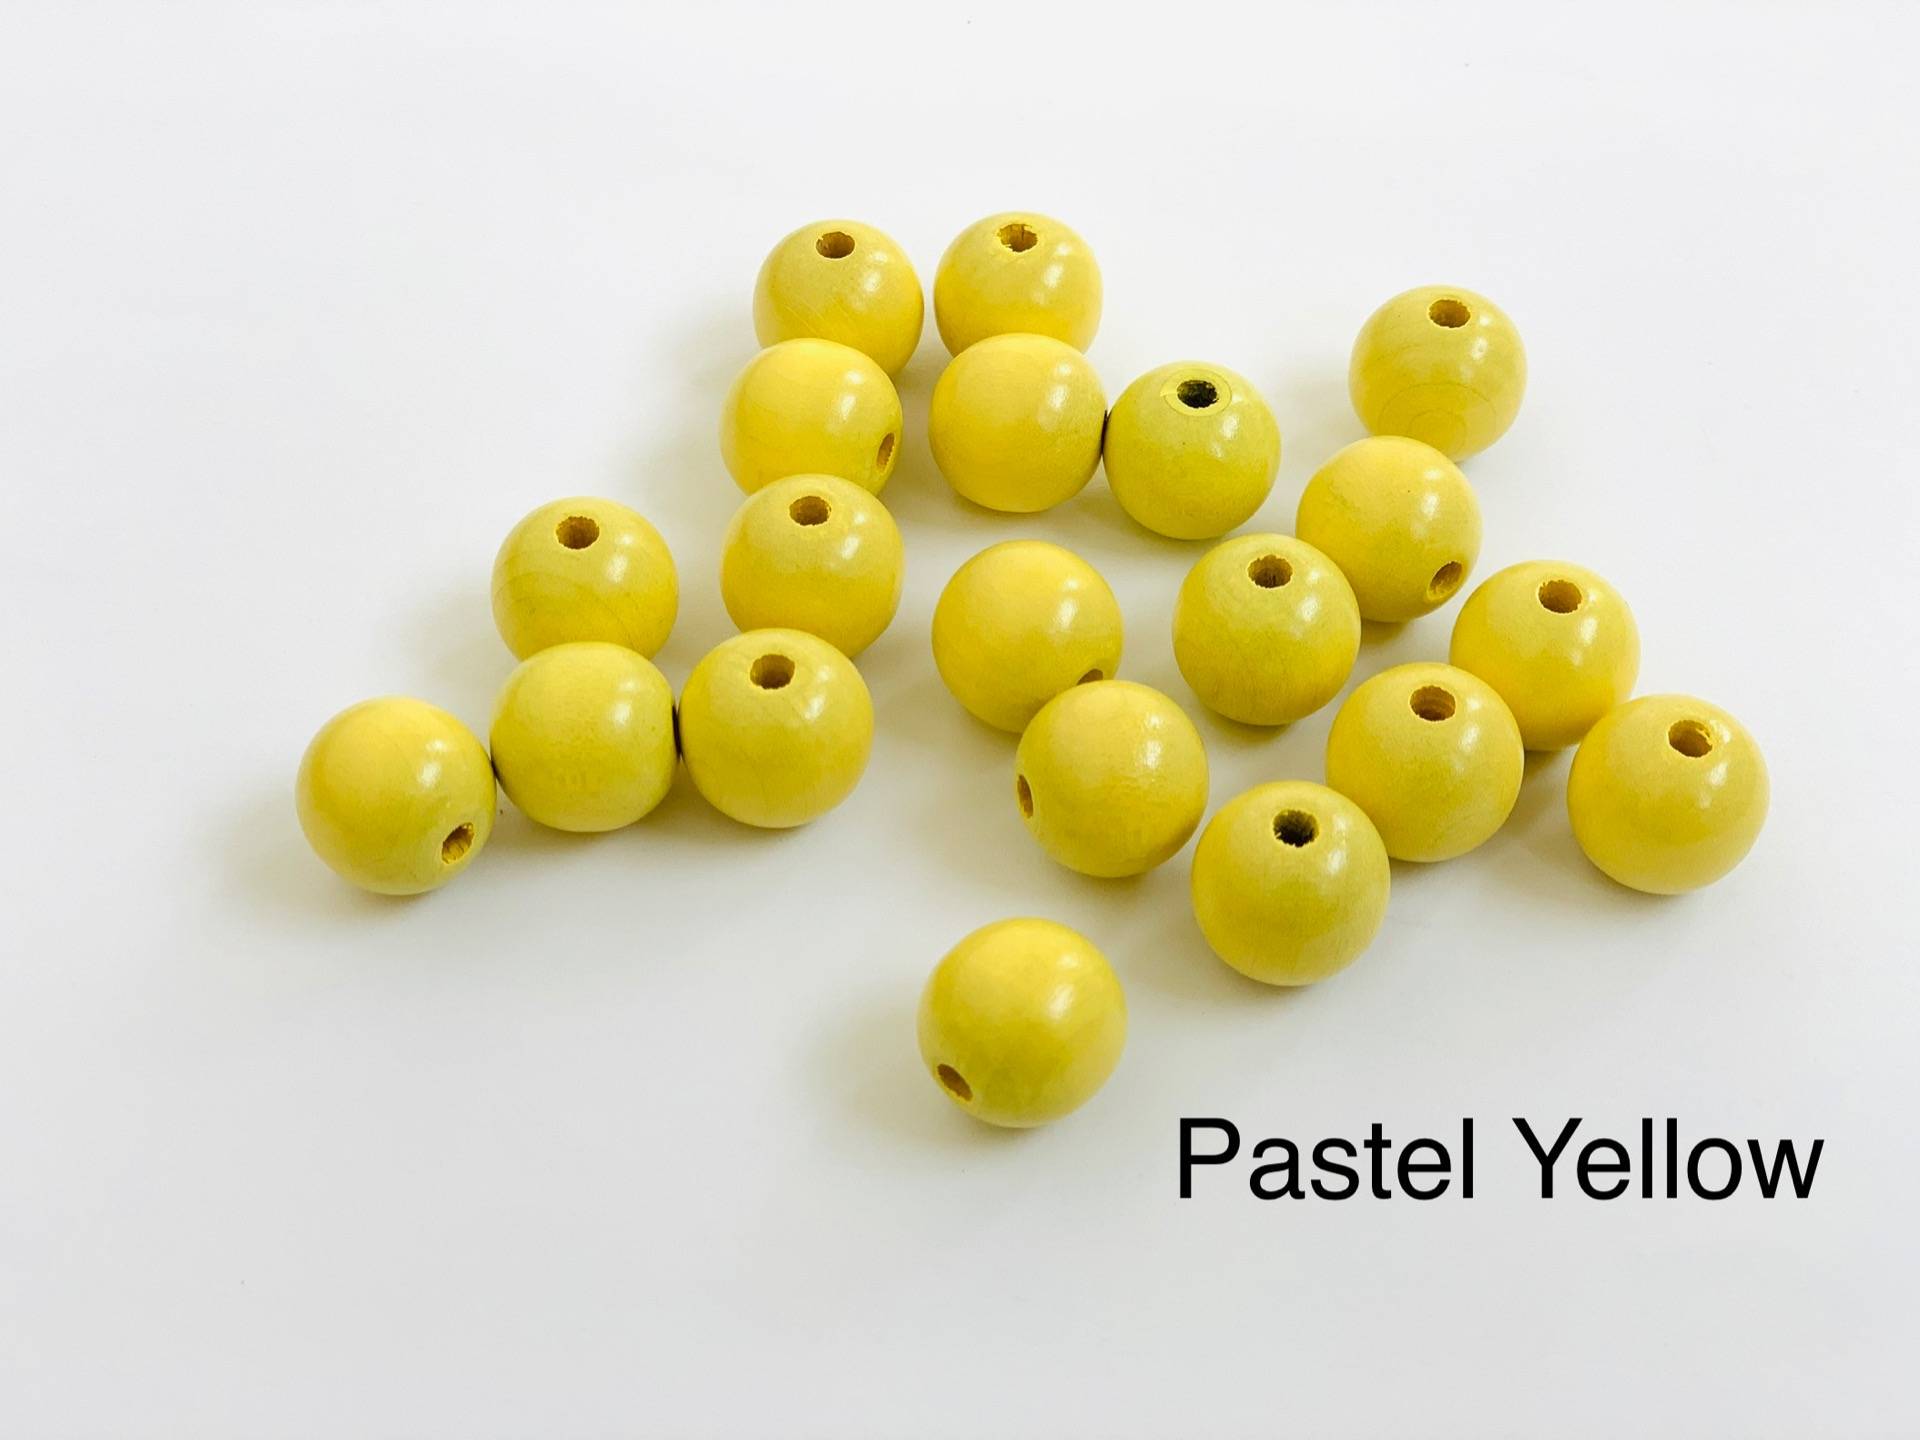 Pastel yellow